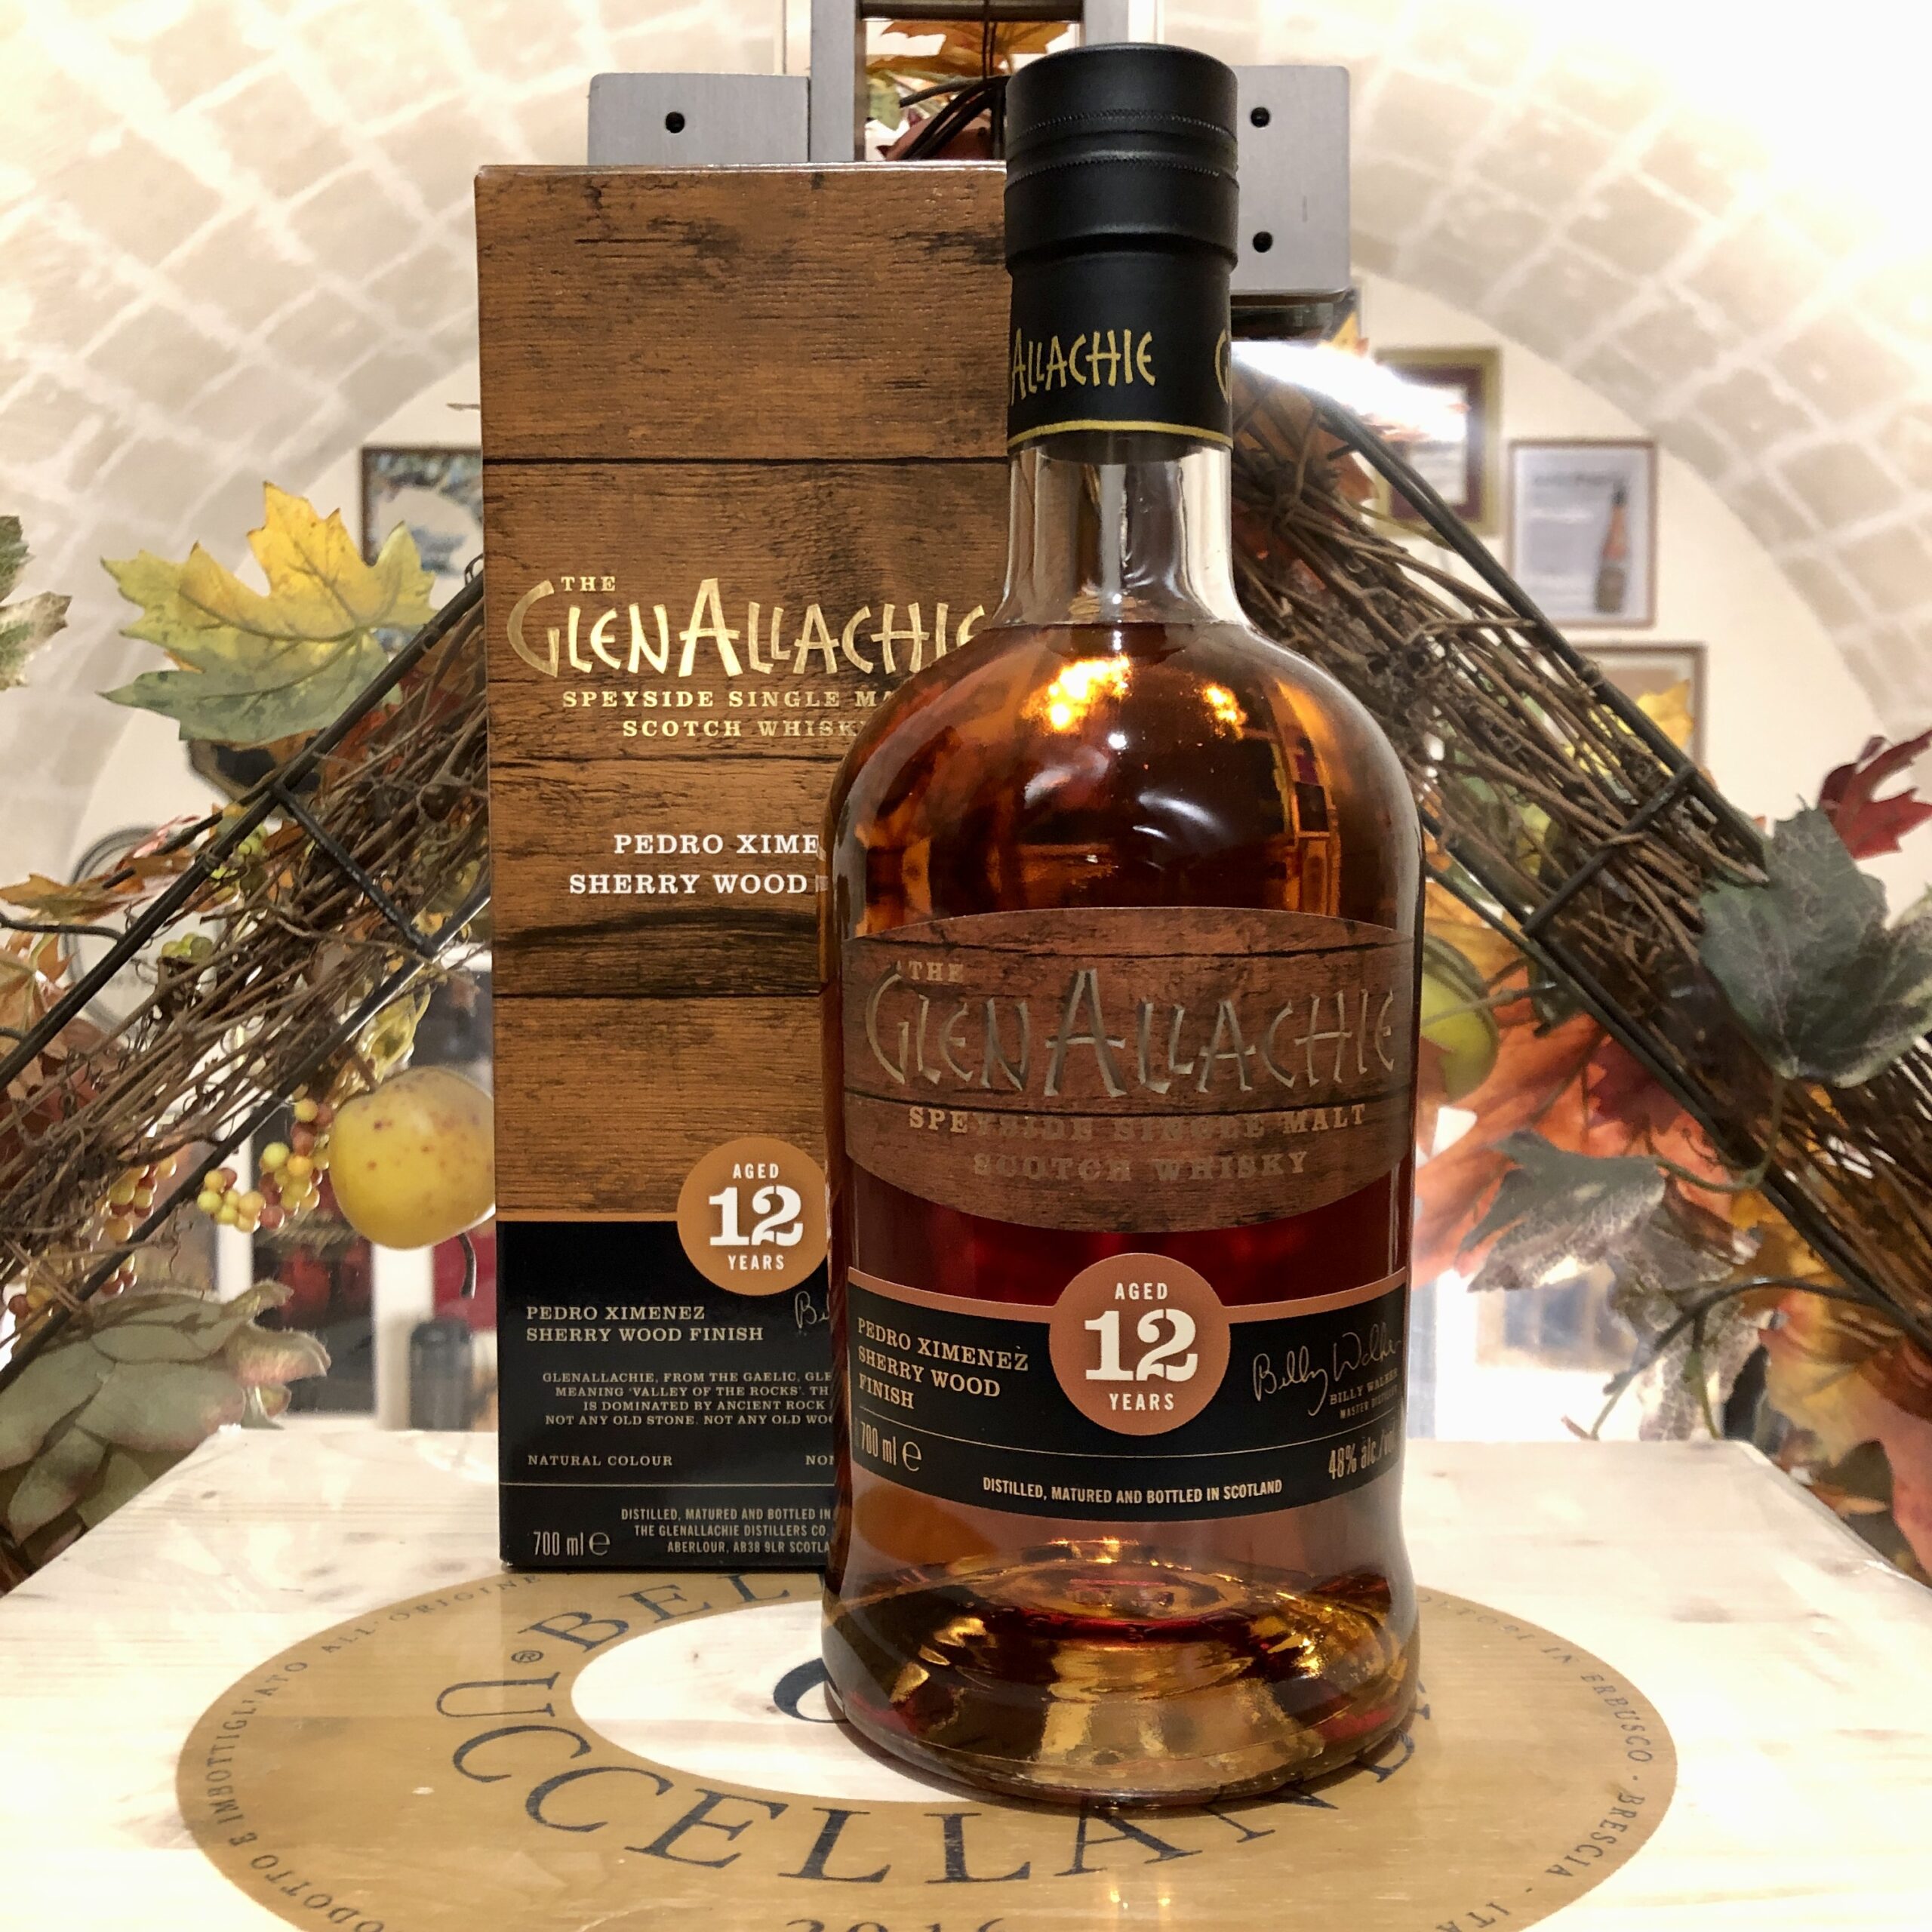 The GlenAllachie Speyside Single Malt Scotch Whisky 12 YO PX Sherry Wood Finish Batch 2019